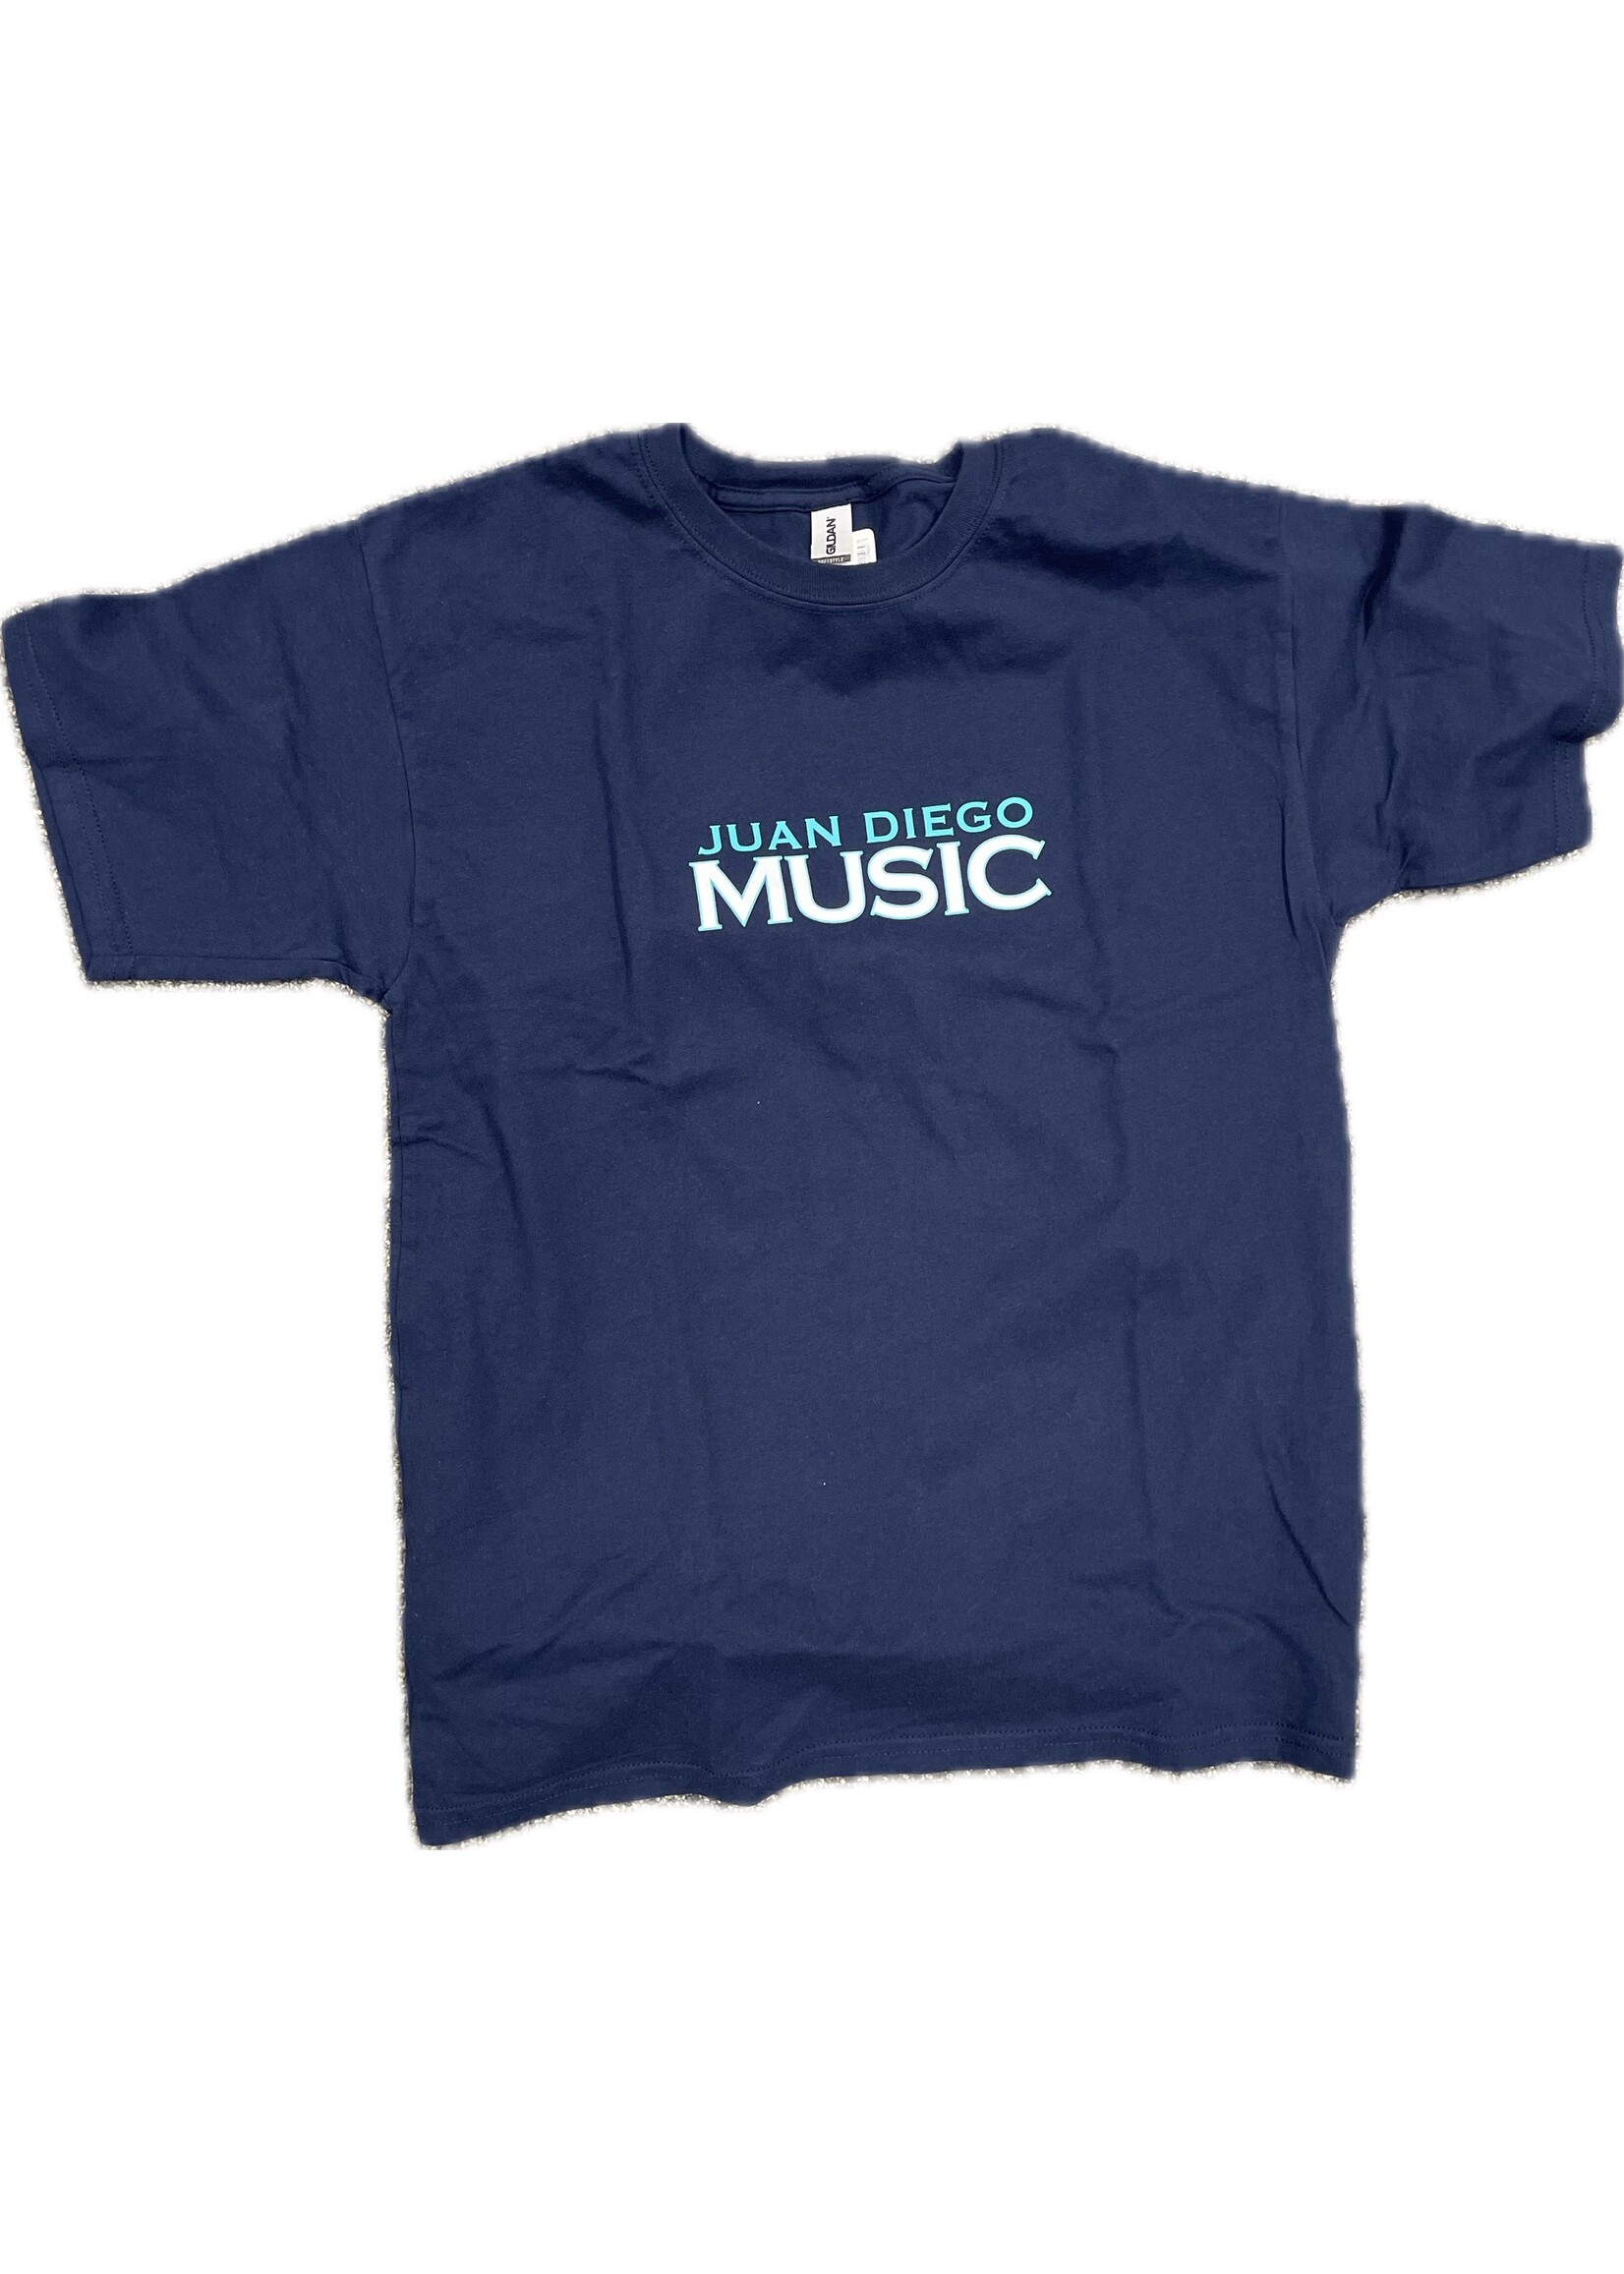 NON-UNIFORM Music, Juan Diego Music Custom Order Unisex S/S Shirt